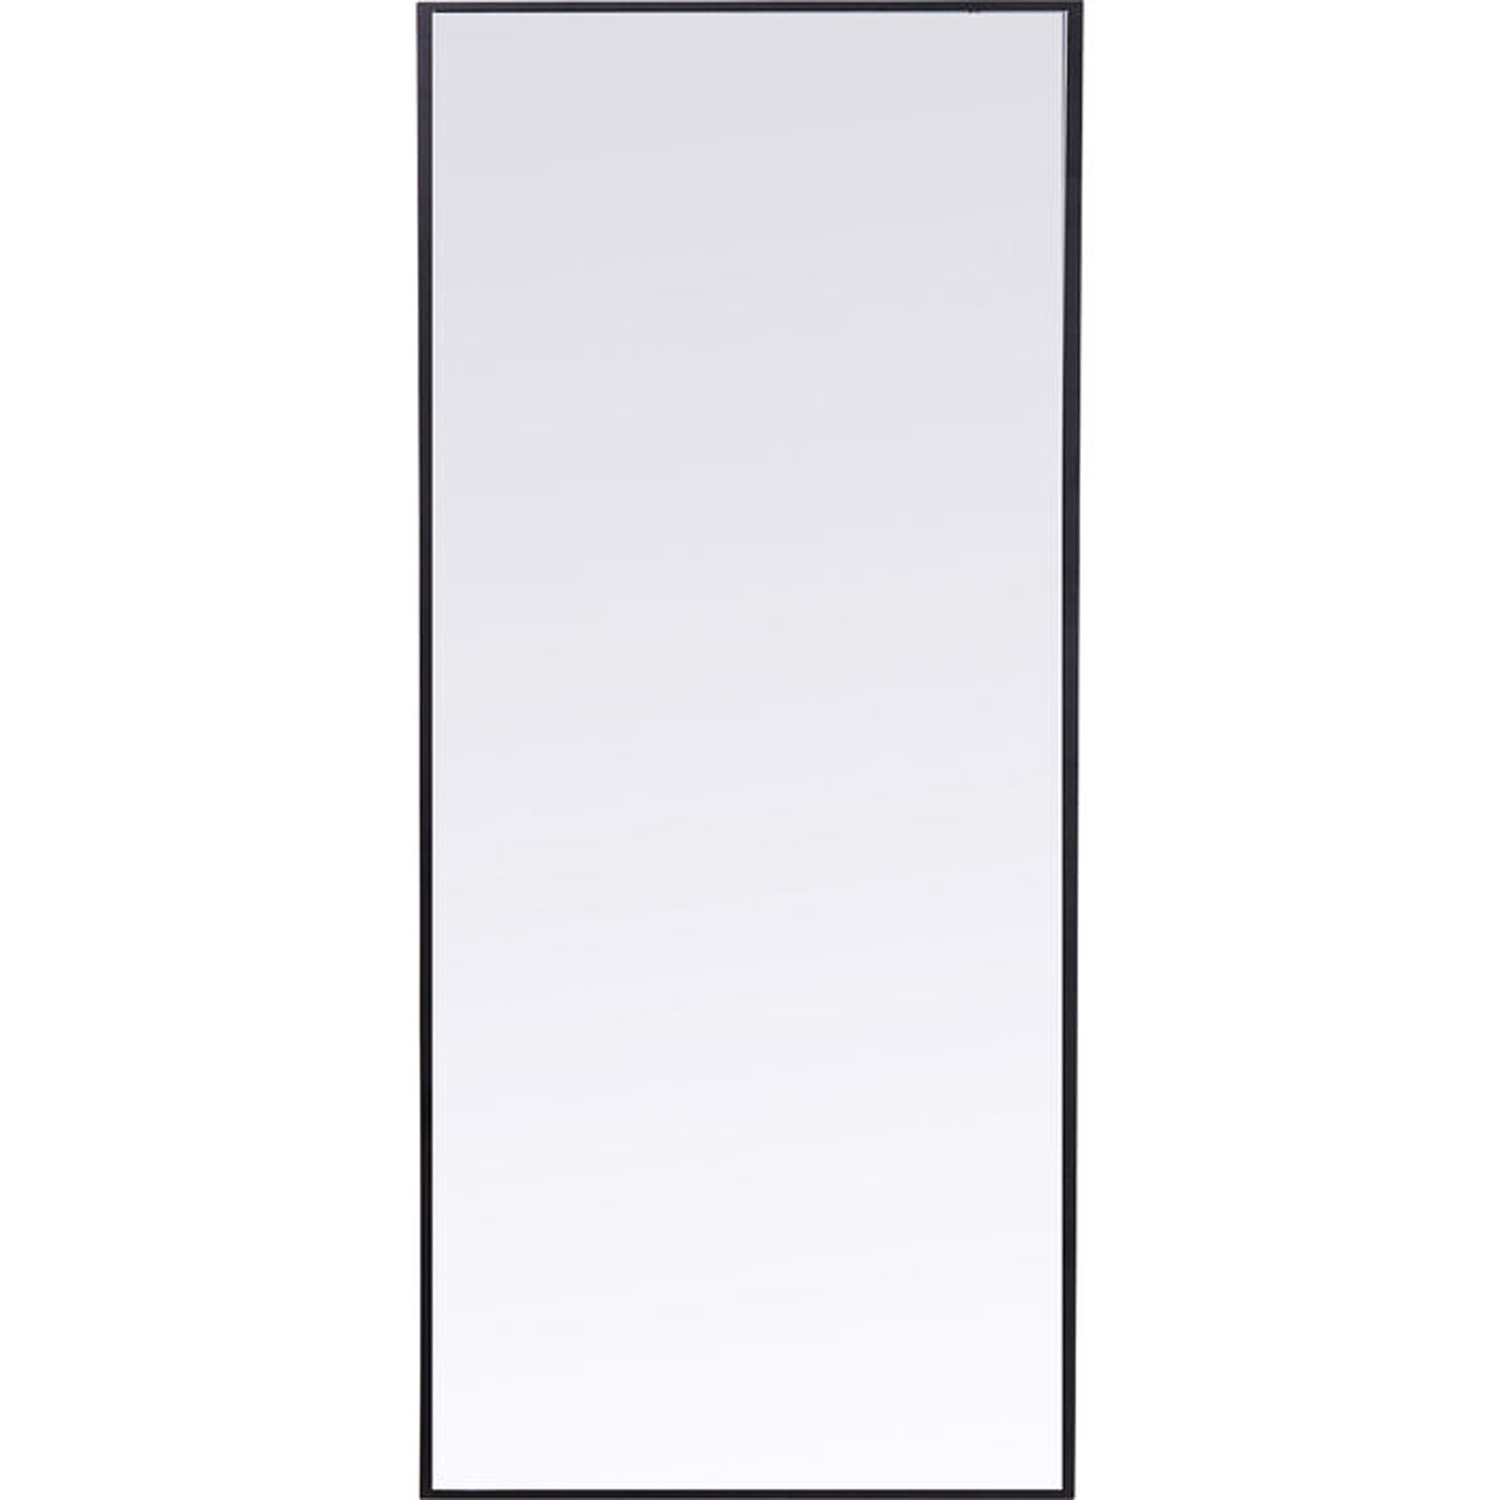 KARE DESIGN Bella MO vægspejl, rektangulær - spejlglas og sort aluminium (60x180)